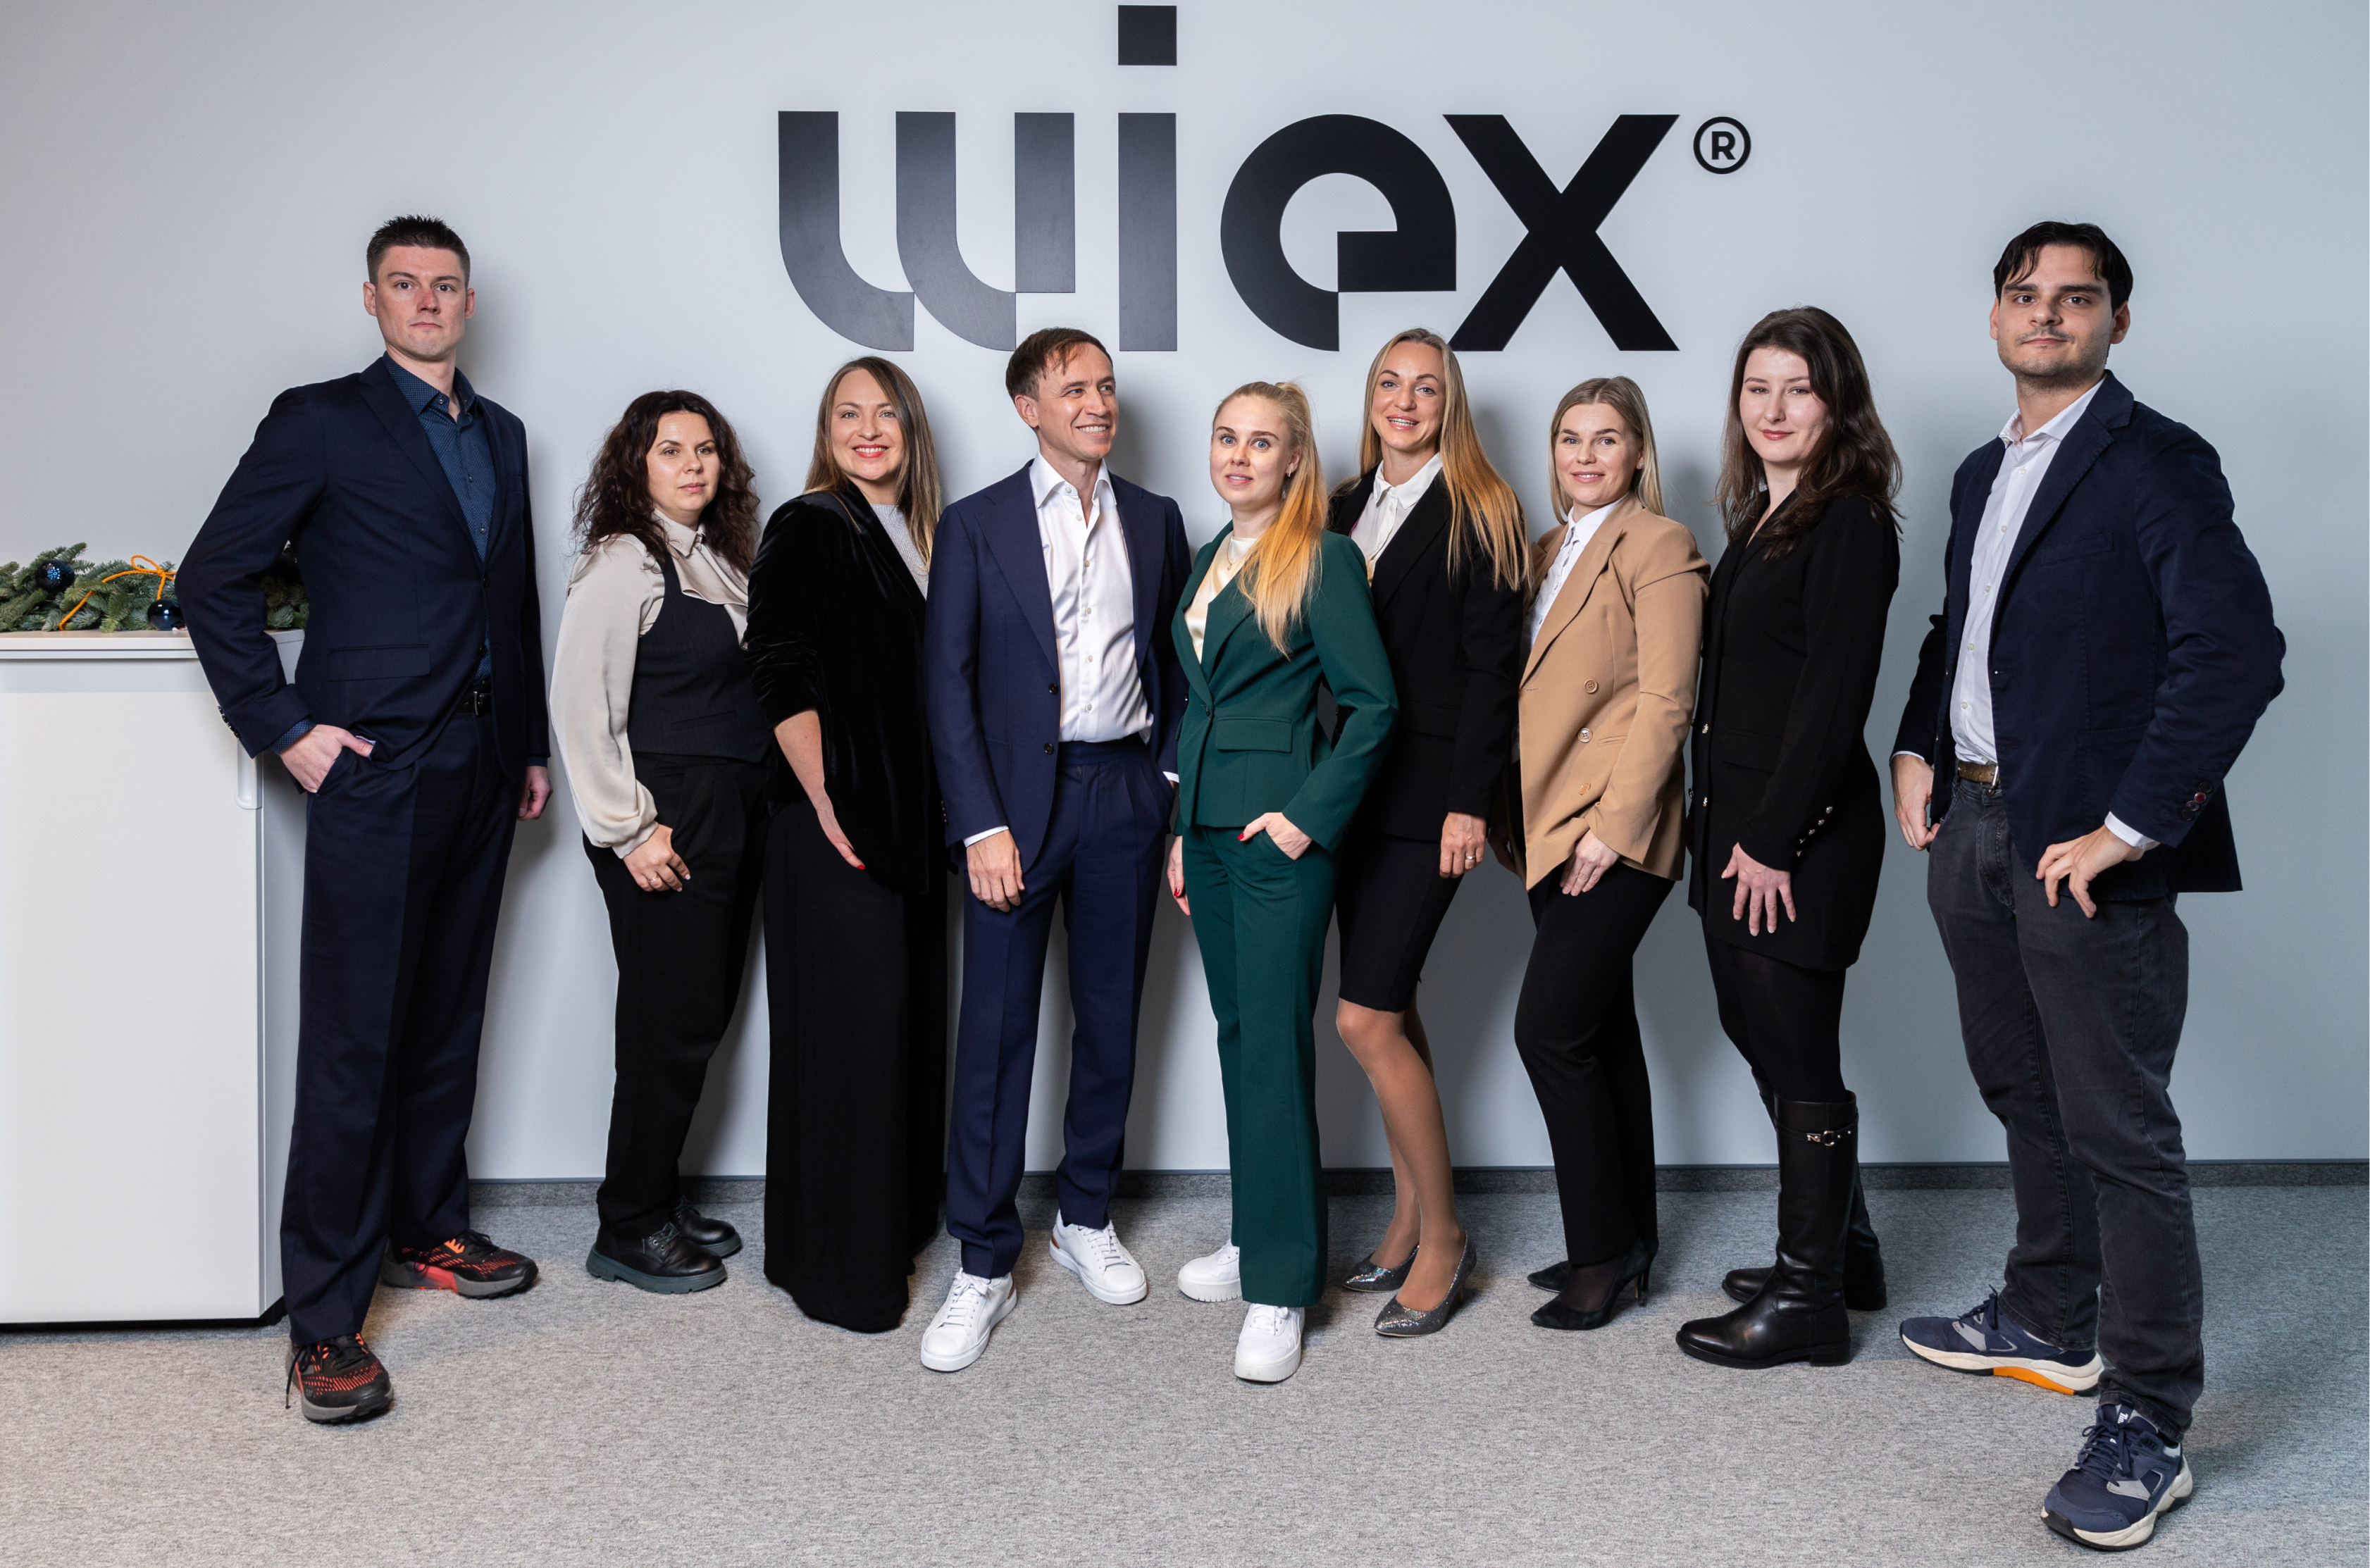 WIEX - your trusted  crypto platform